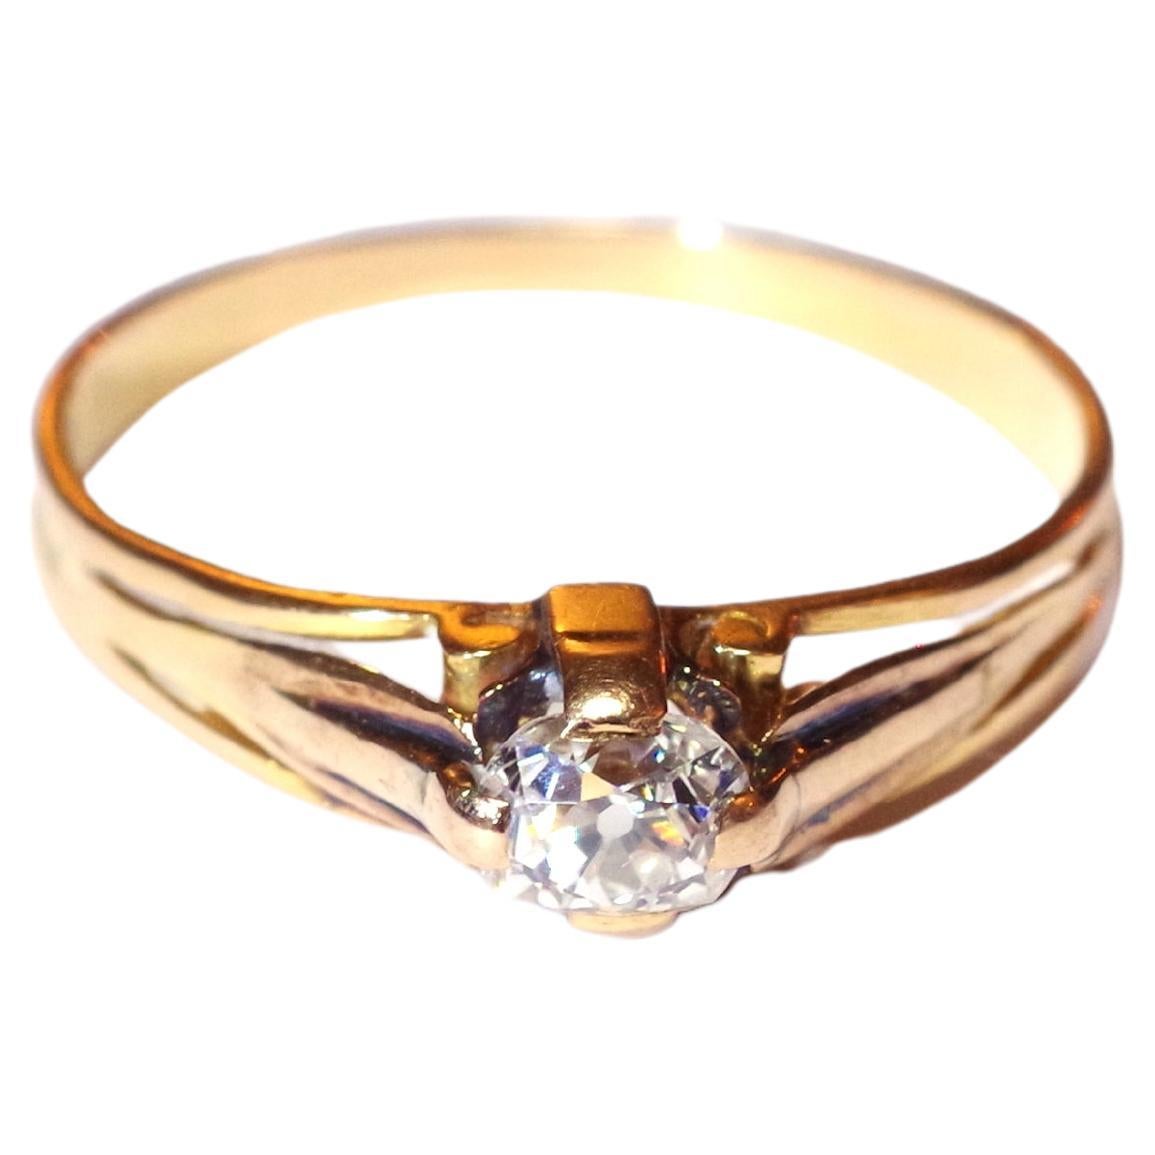 Antique Victorian Solitaire Diamond Ring in 18 Karat Pink Gold, Wedding Ring